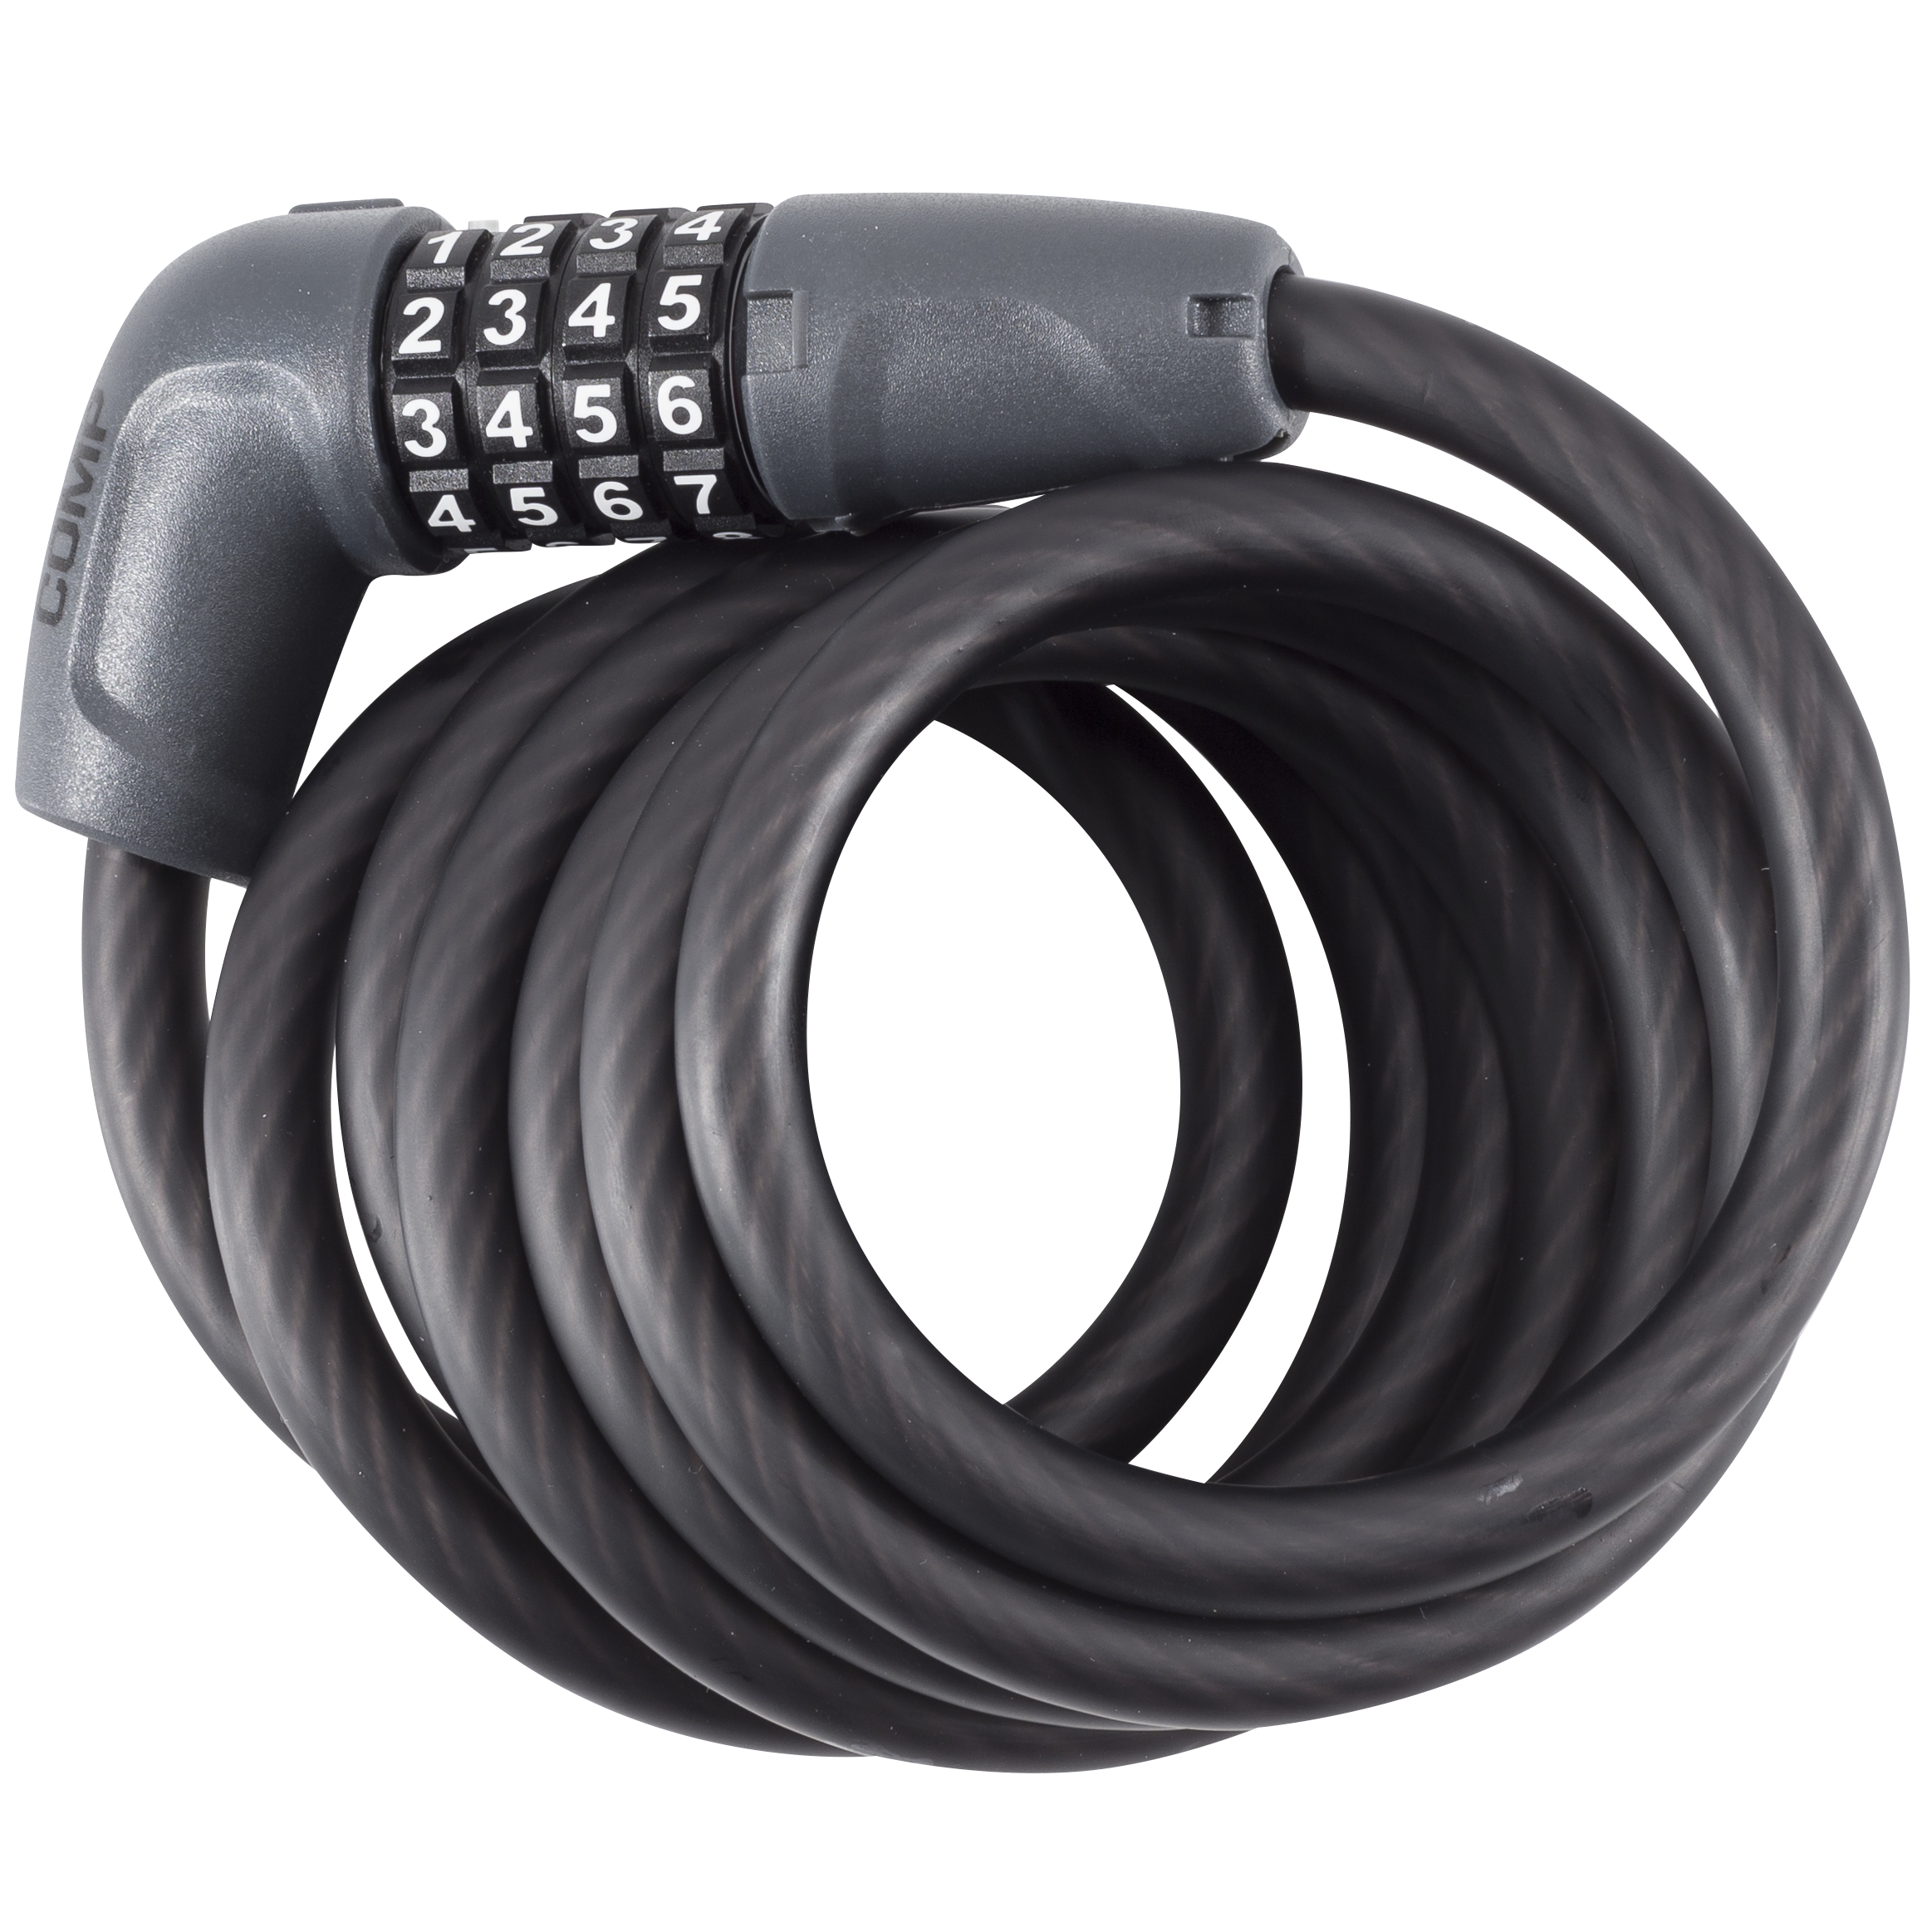 Lock Bontrager Comp Combo Cable 10mm x 180cm Black